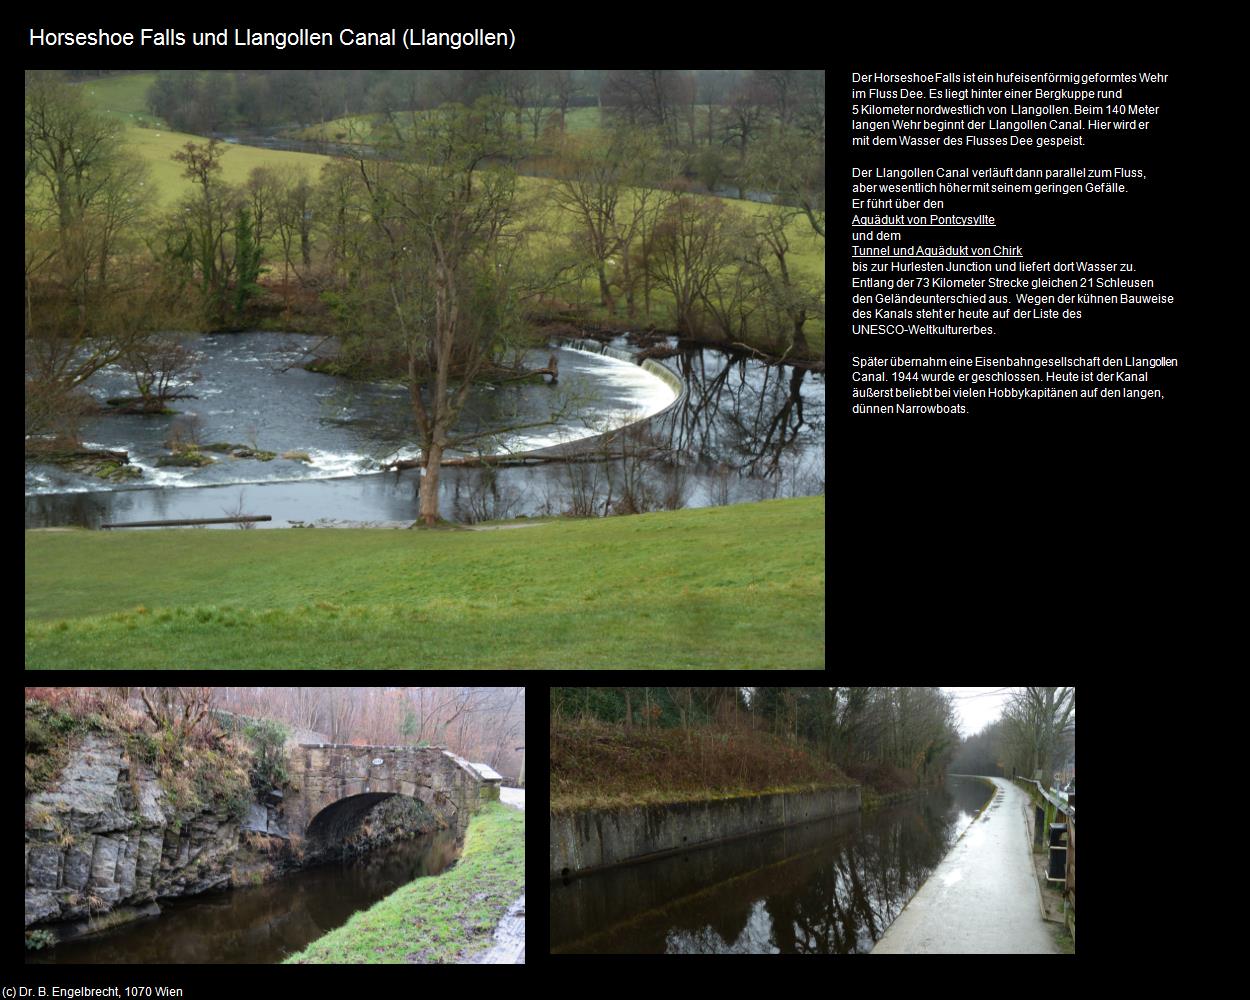 Horseshoe Falls und Llangollen Canal  (Llangollen, Wales) in Kulturatlas-ENGLAND und WALES(c)B.Engelbrecht